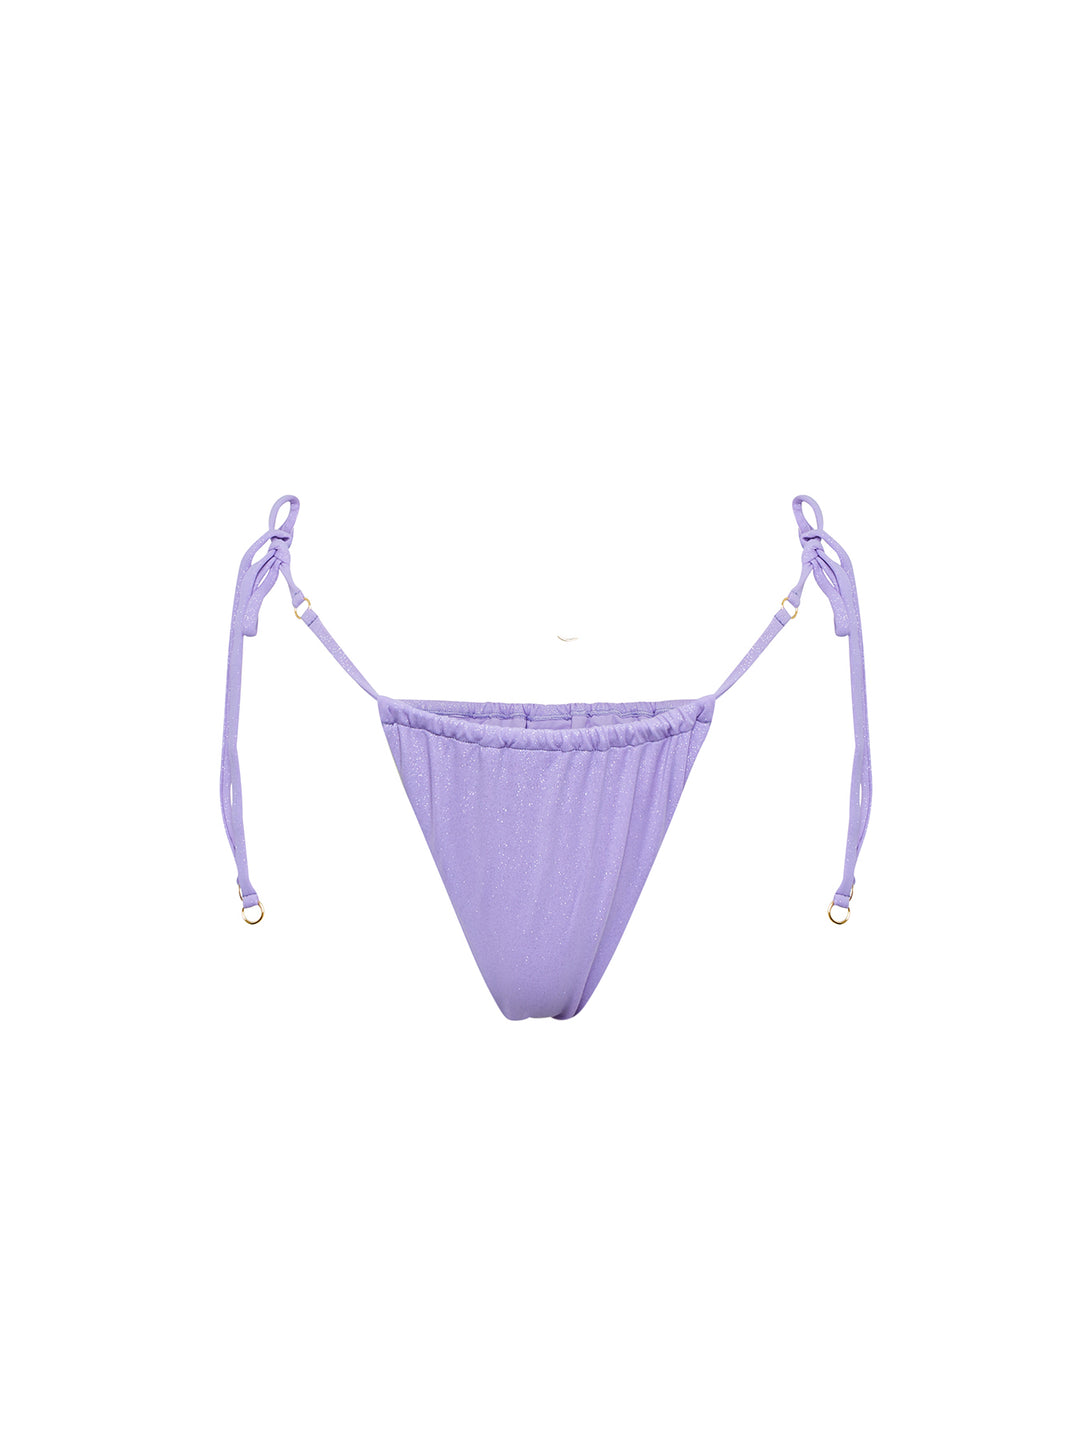 POSITANO - Adjustable Bottom • Glittery Lavender